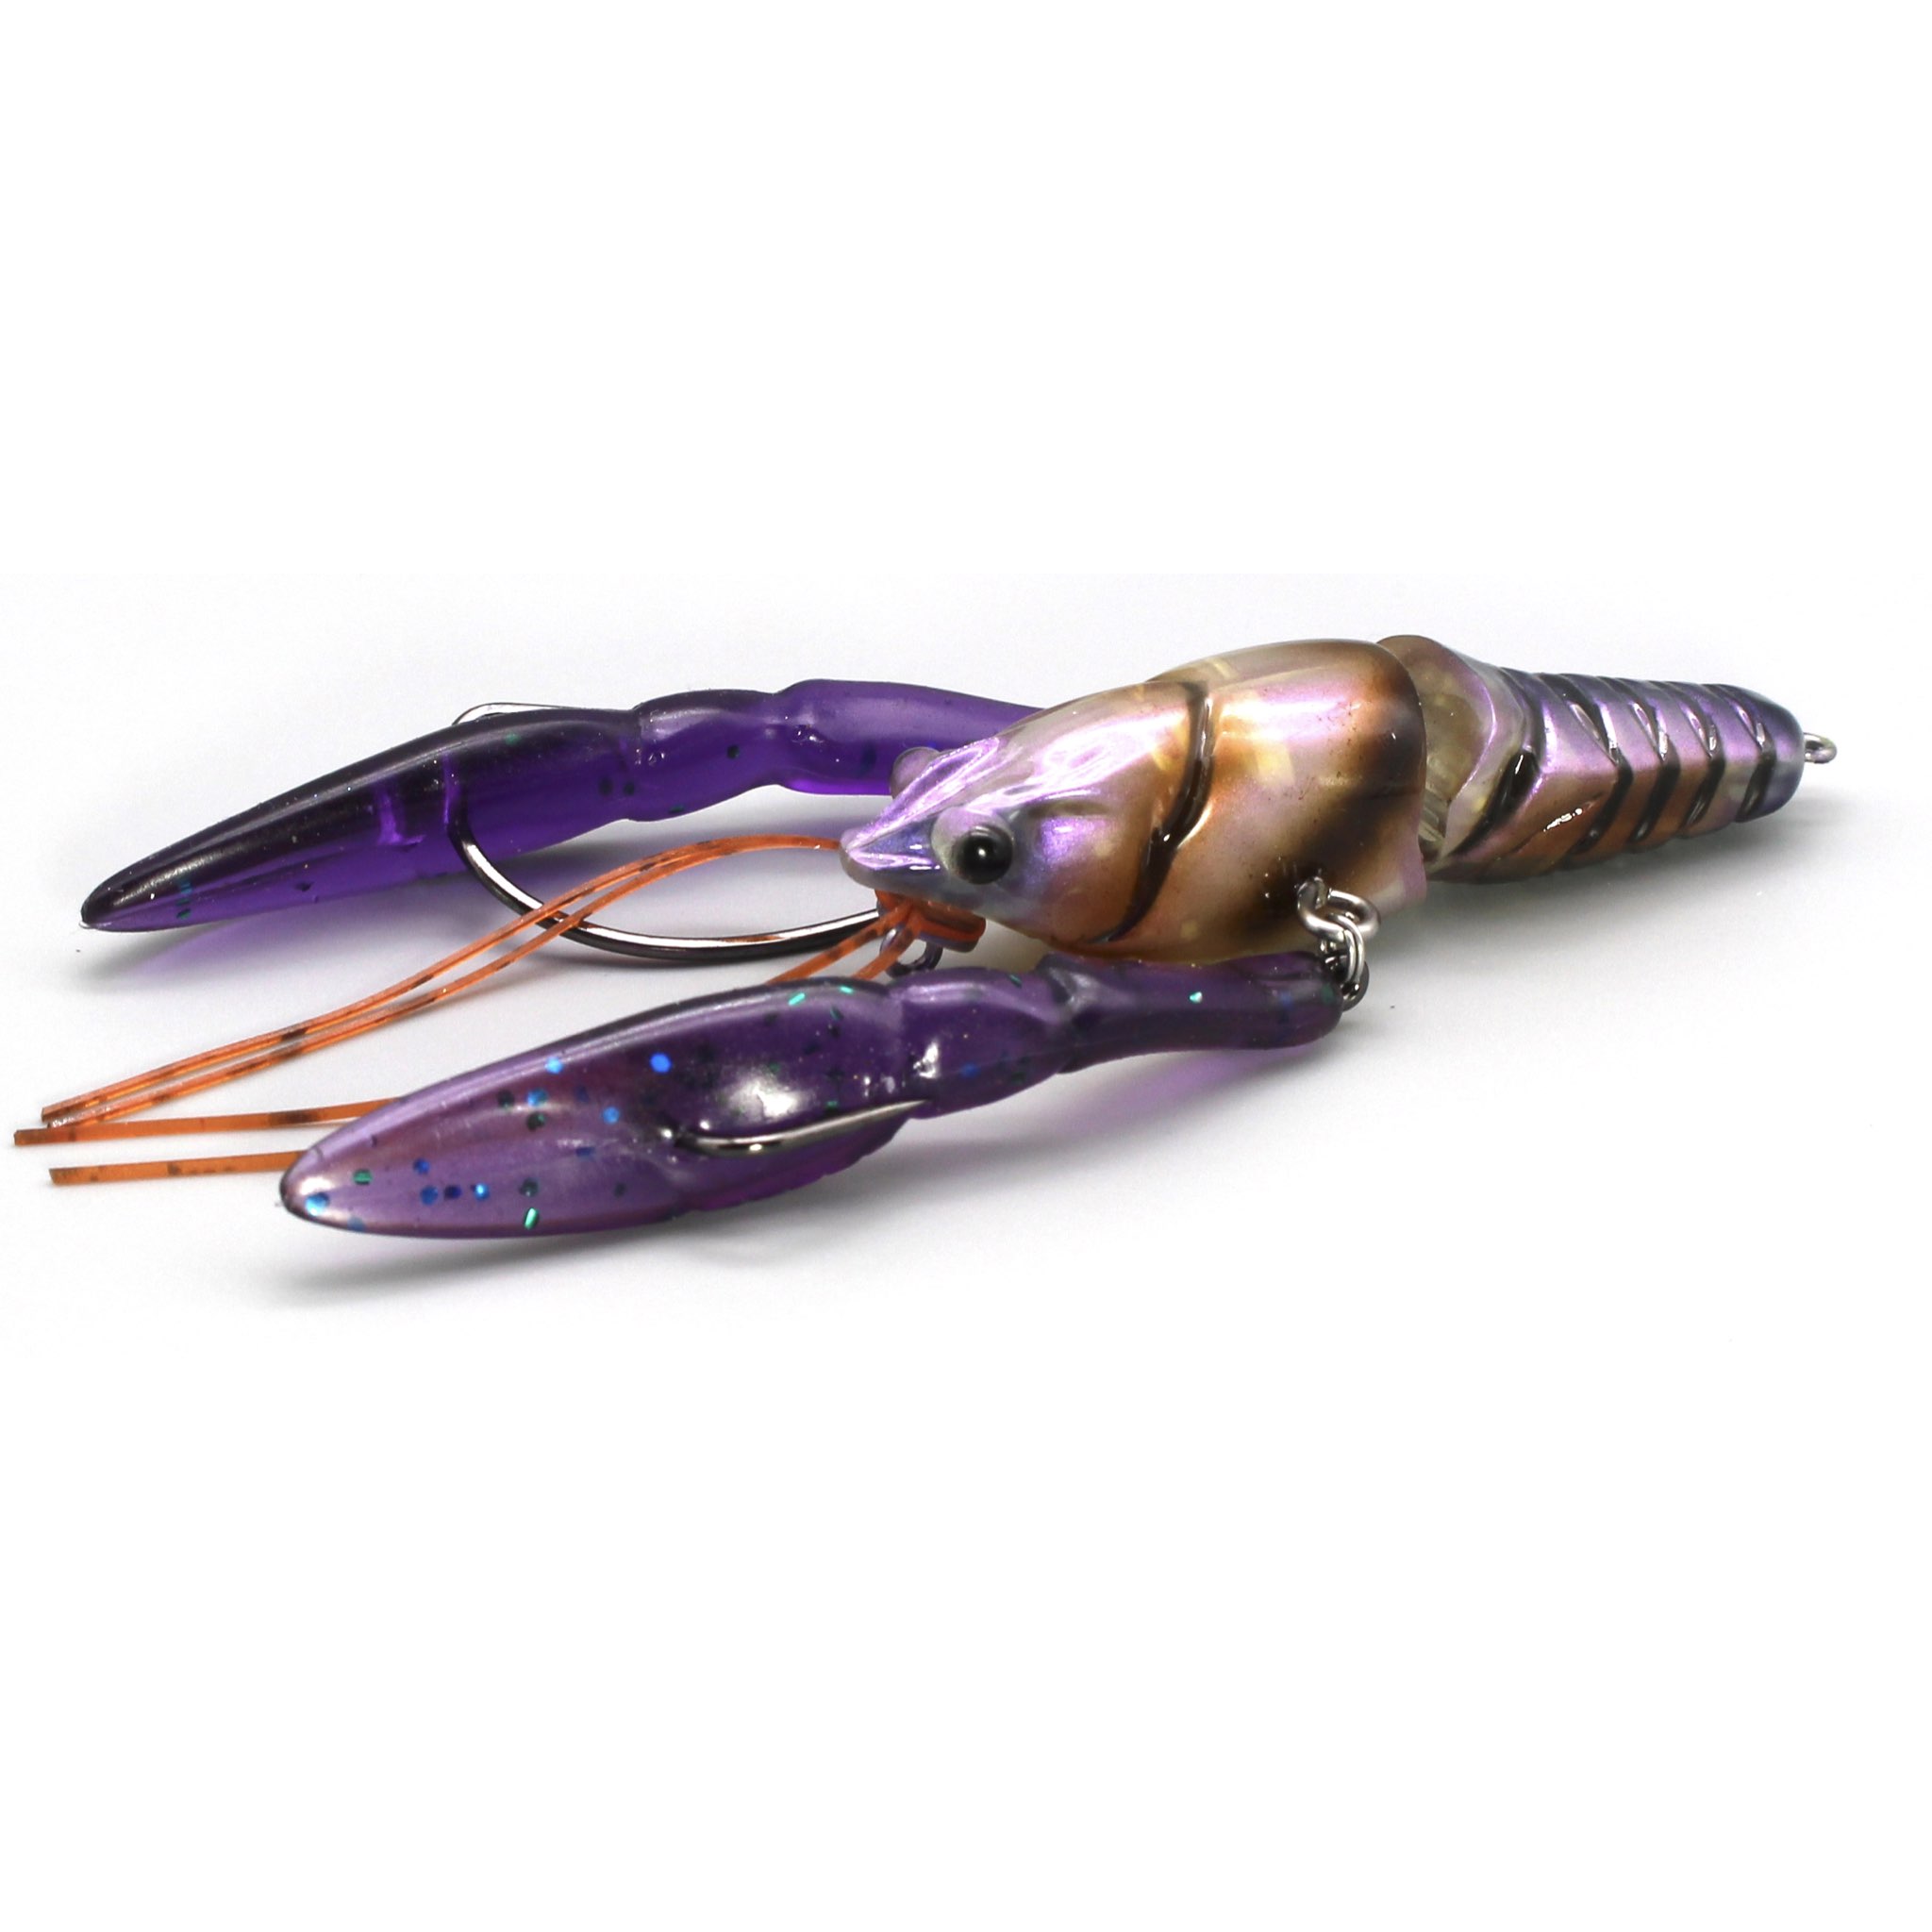 Joint Zari 65 Heavy Claw#108 Purple Craw - Biovex